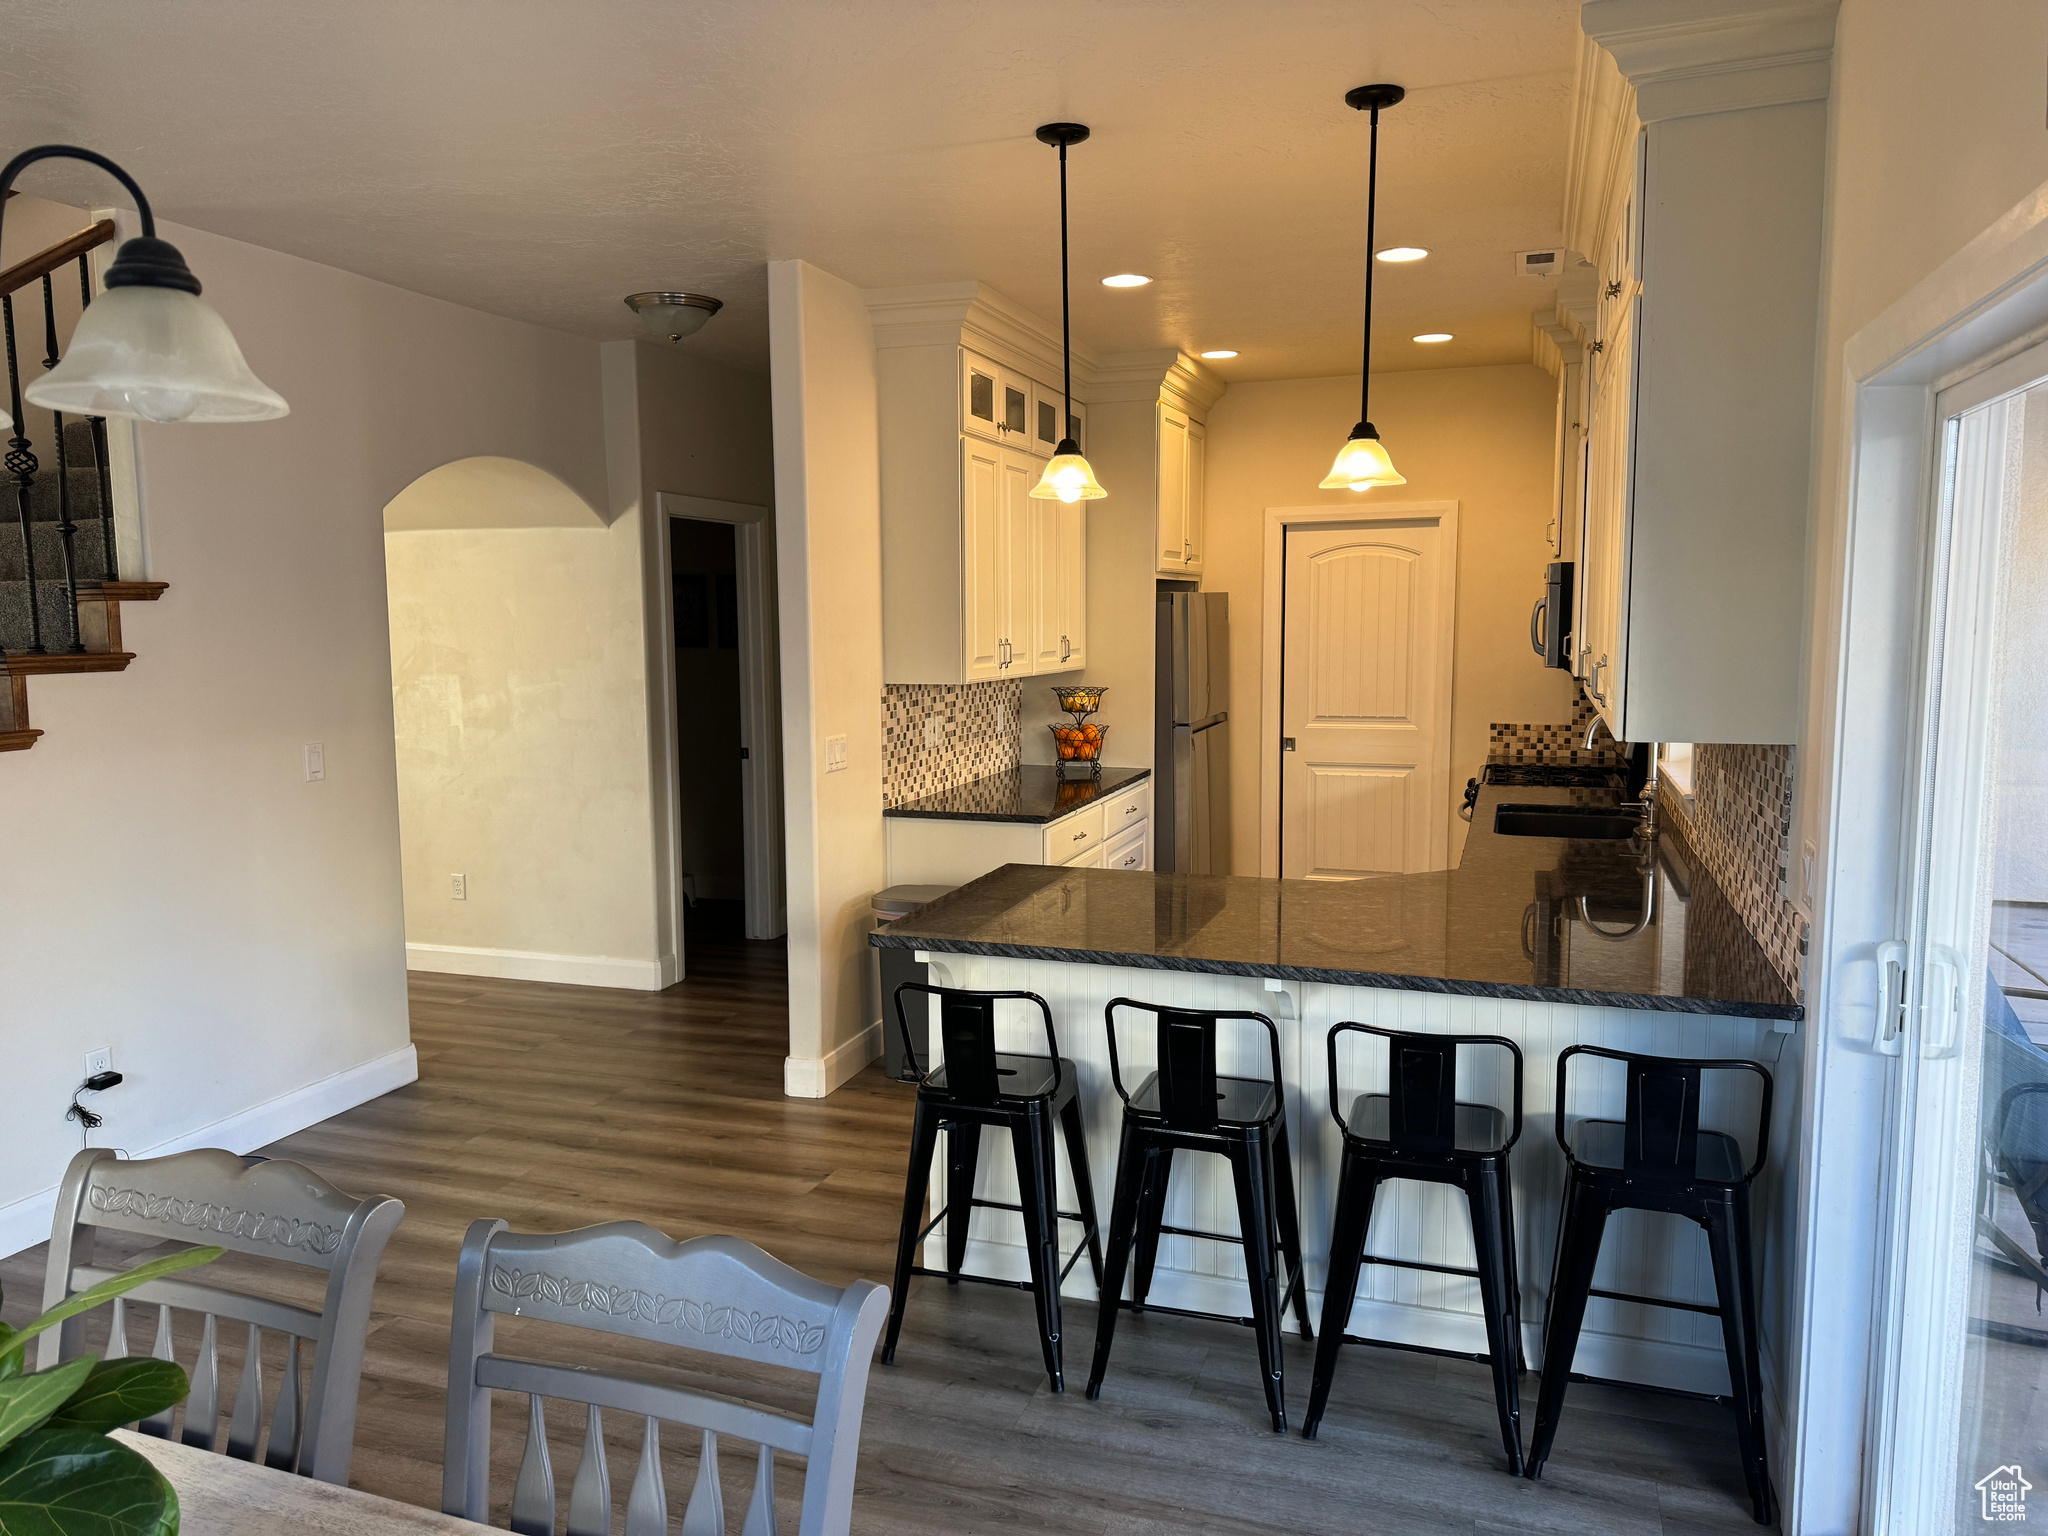 Kitchen featuring pendant lighting, dark hardwood / wood-style flooring, stainless steel appliances, backsplash, and kitchen peninsula